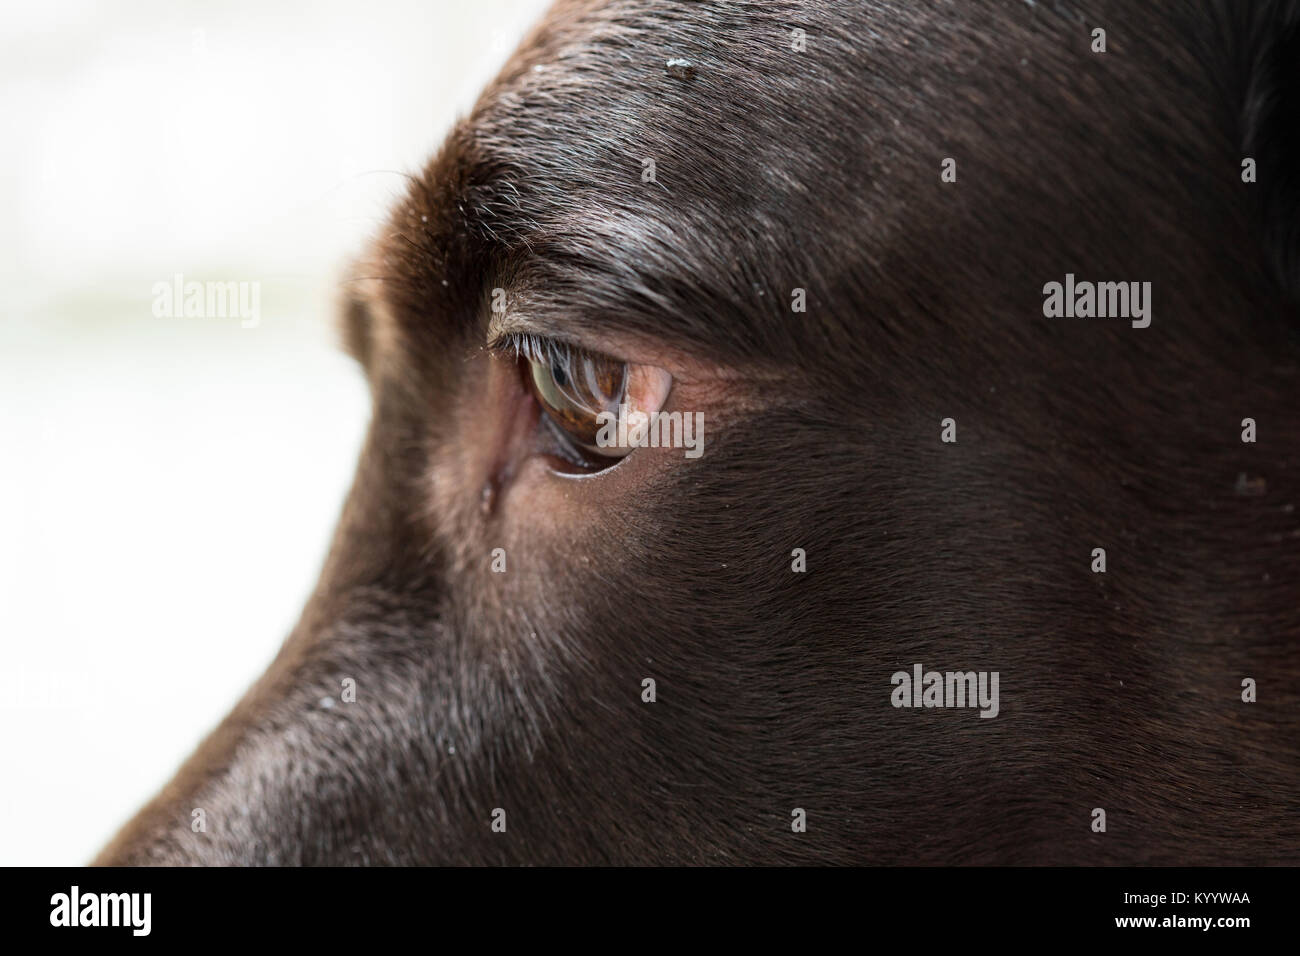 Closeup of a chocolate Labrador retrievers eye and face. Stock Photo